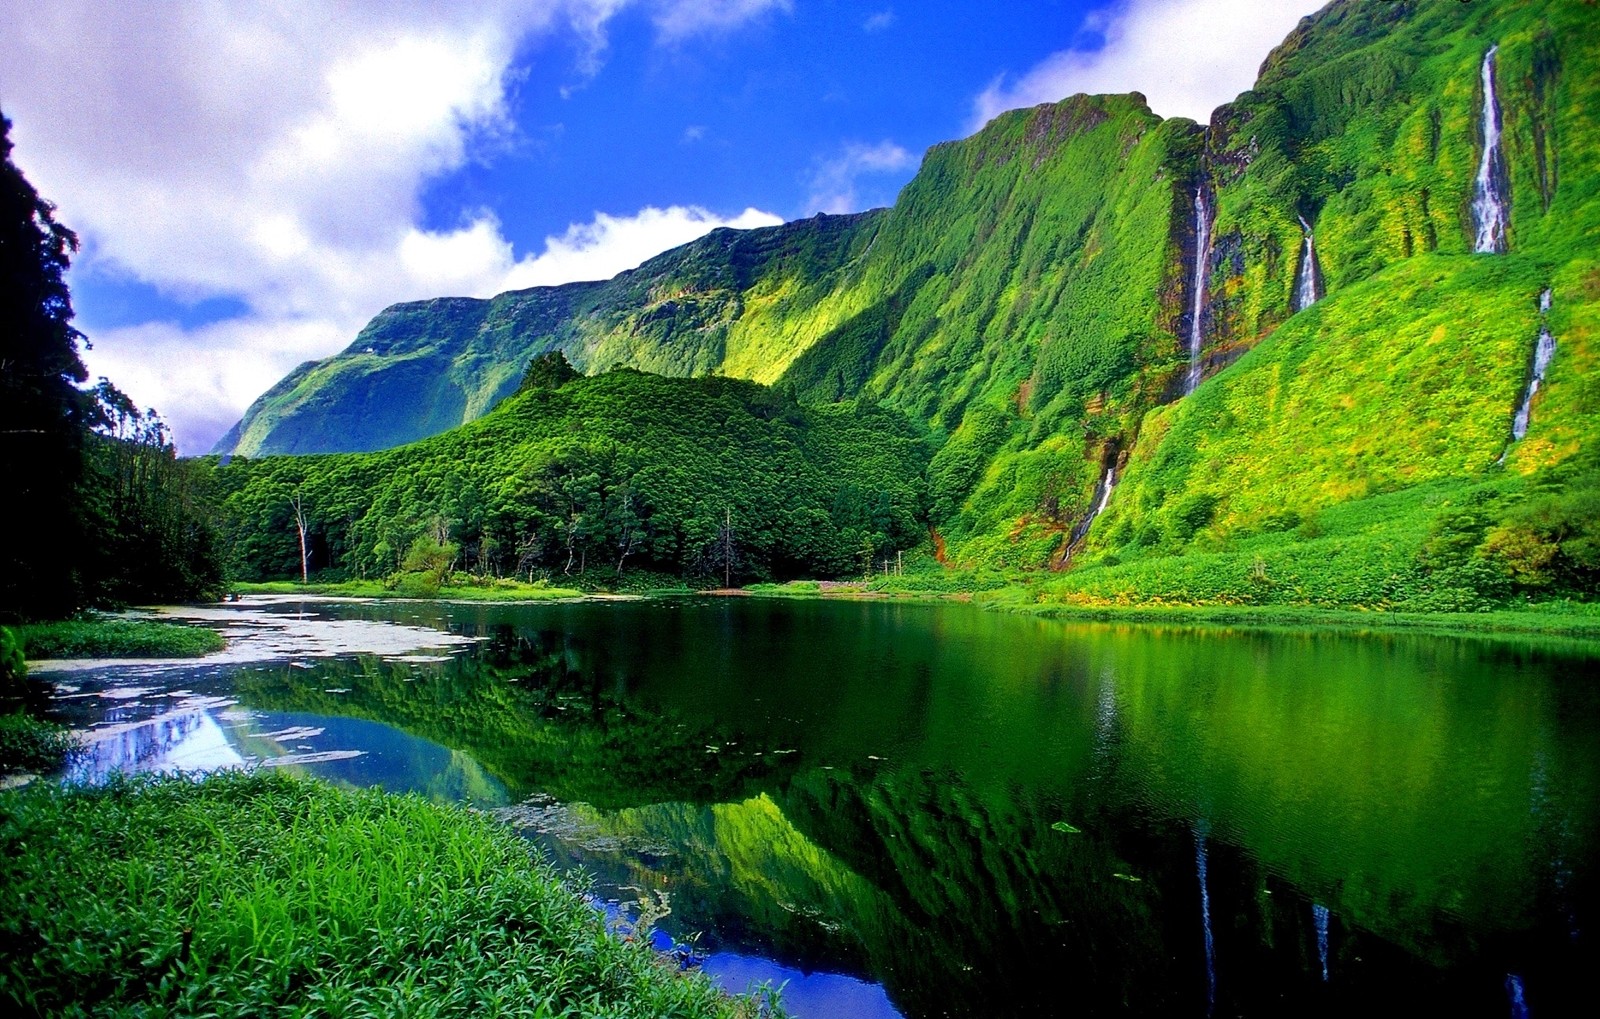 high definition desktop wallpaper,nature,natural landscape,highland,body of water,mountainous landforms